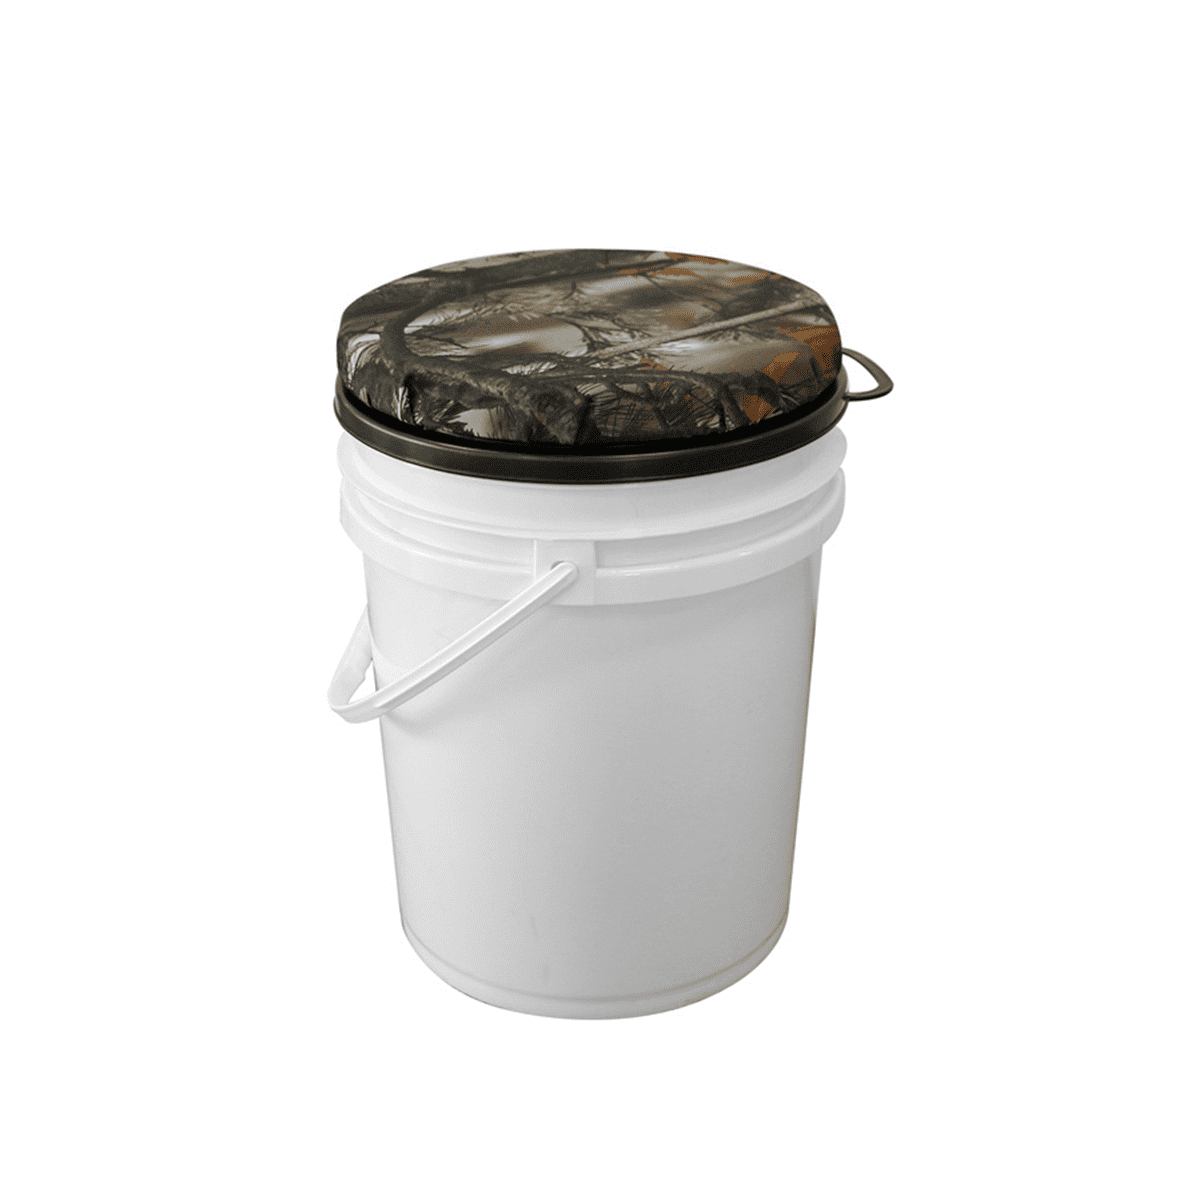 5 Gallon Bucket SeatCushion, Swivel Bucket Pad,BucketSeat Cover Used for  Hunting Gardening Camping Fishing B 